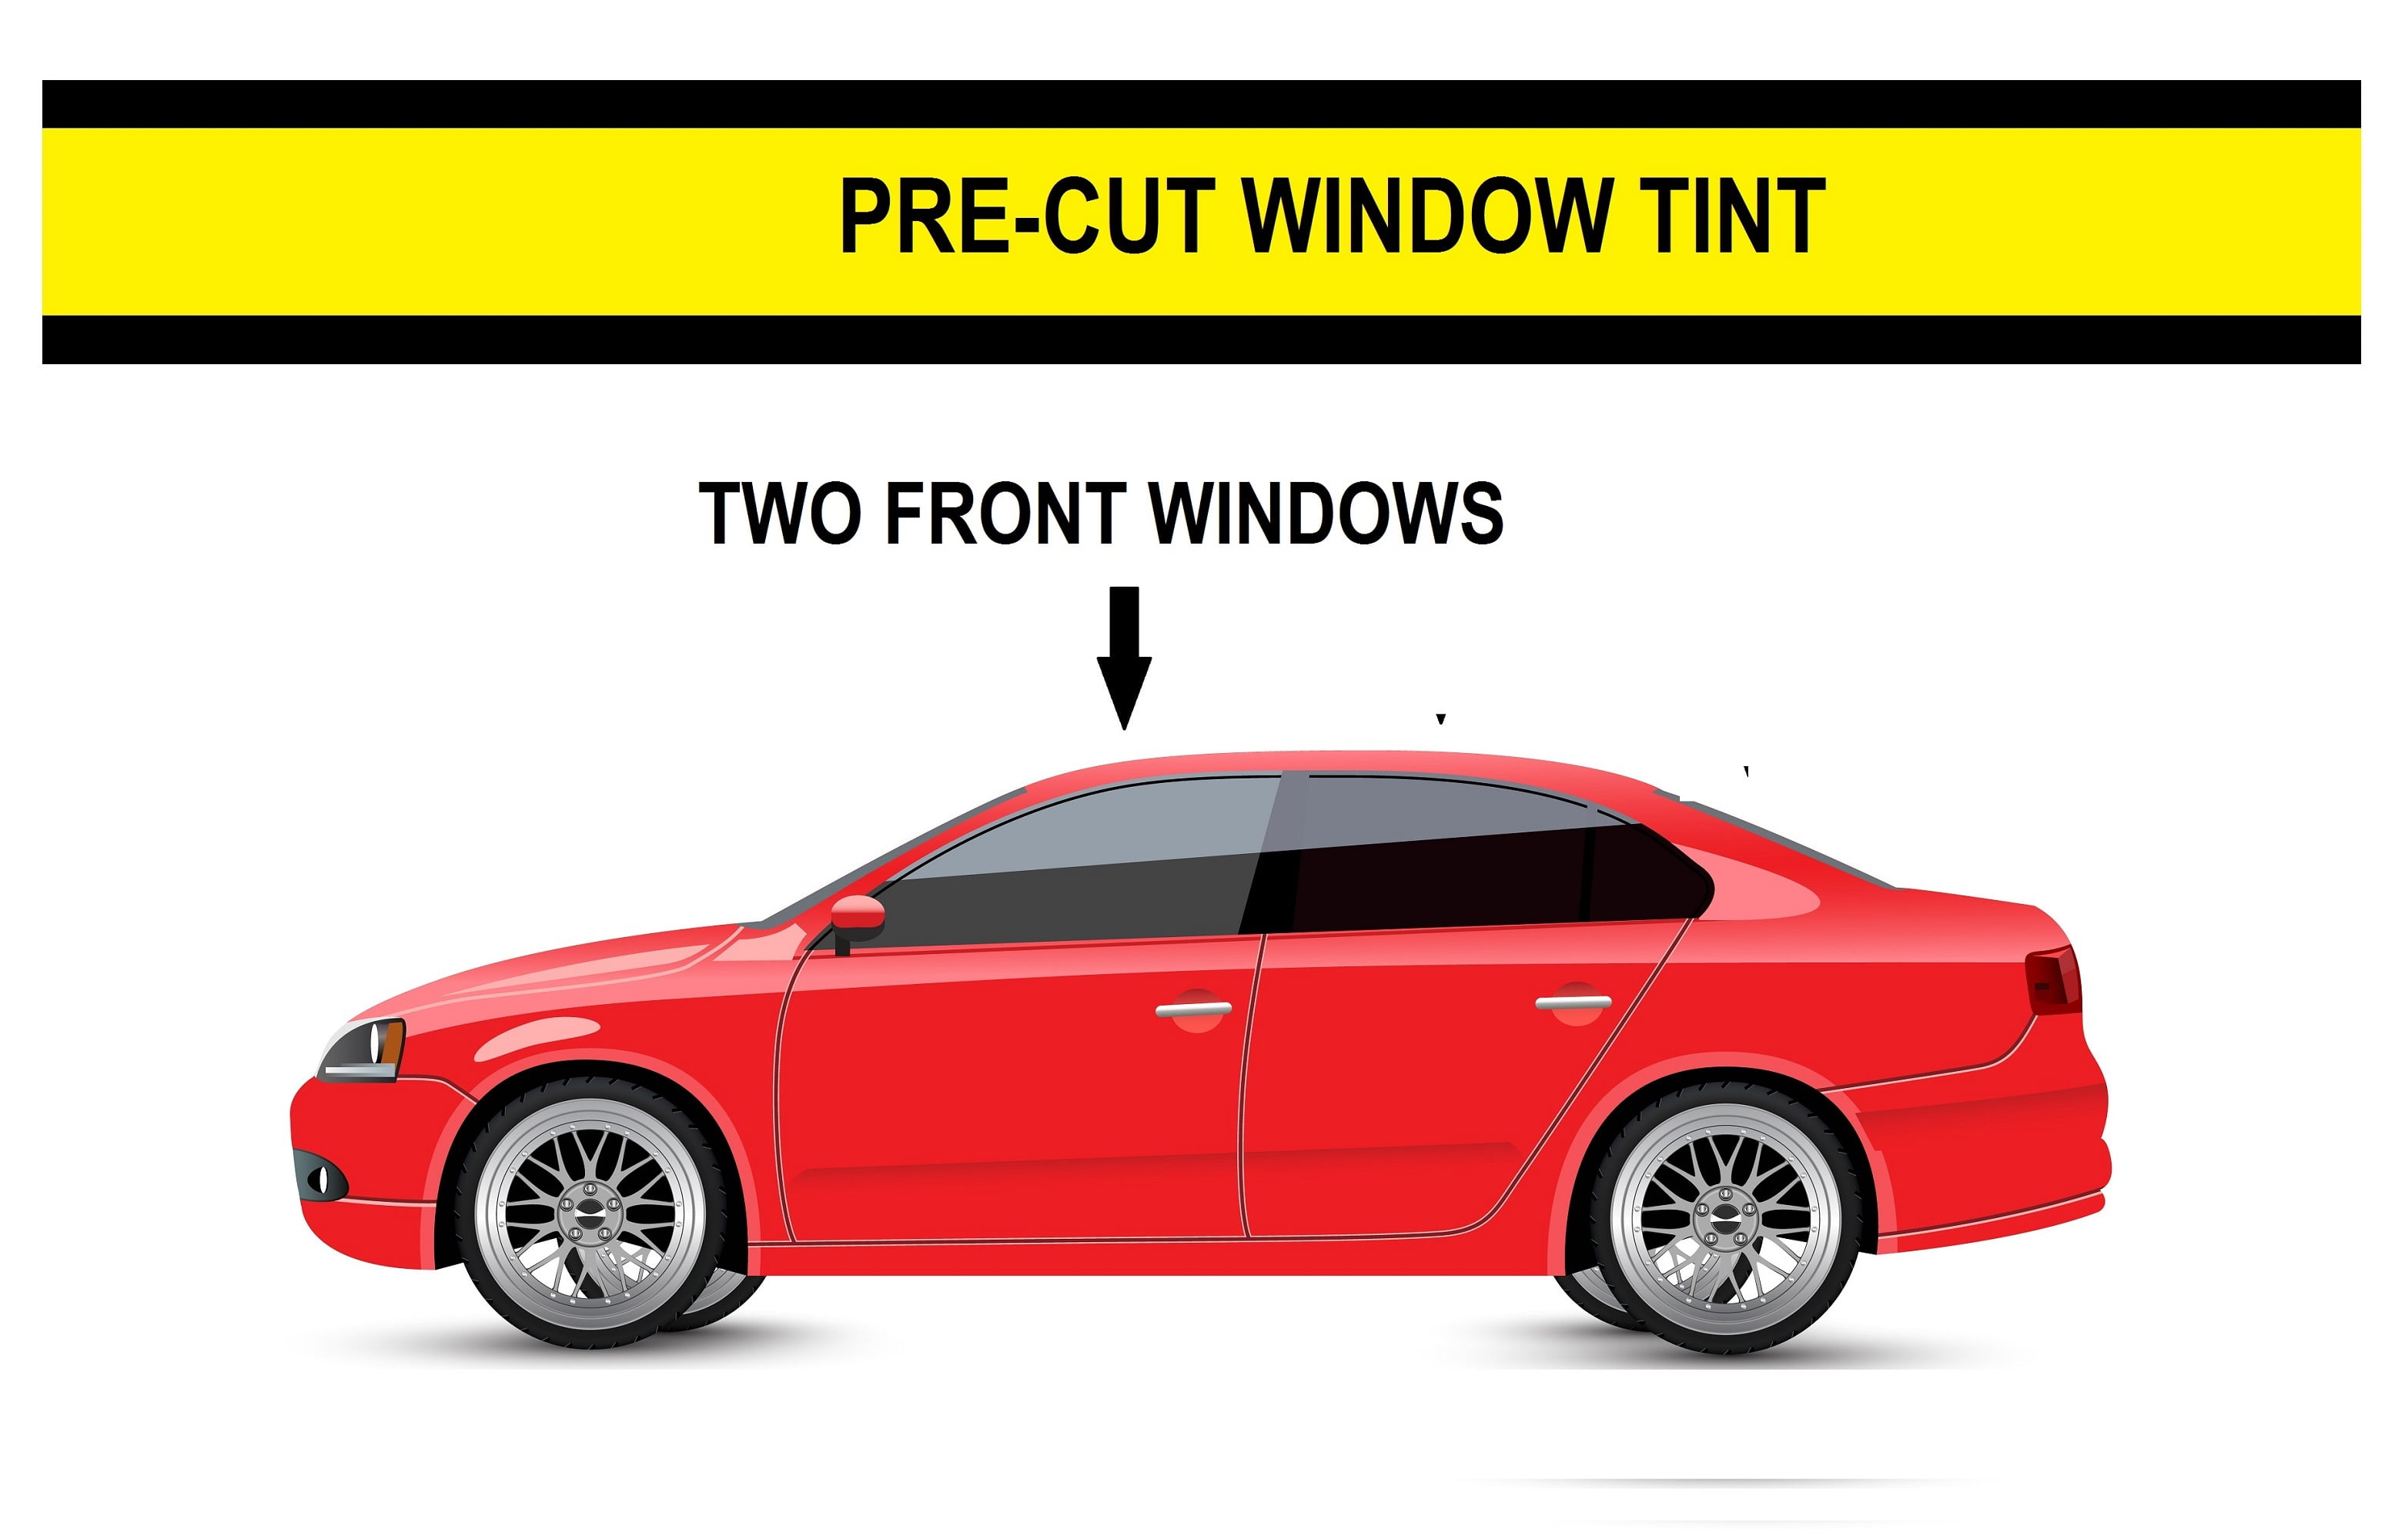 Precut Window Tint for Ford Focus Sedan 00-07 All Windows Any Shade